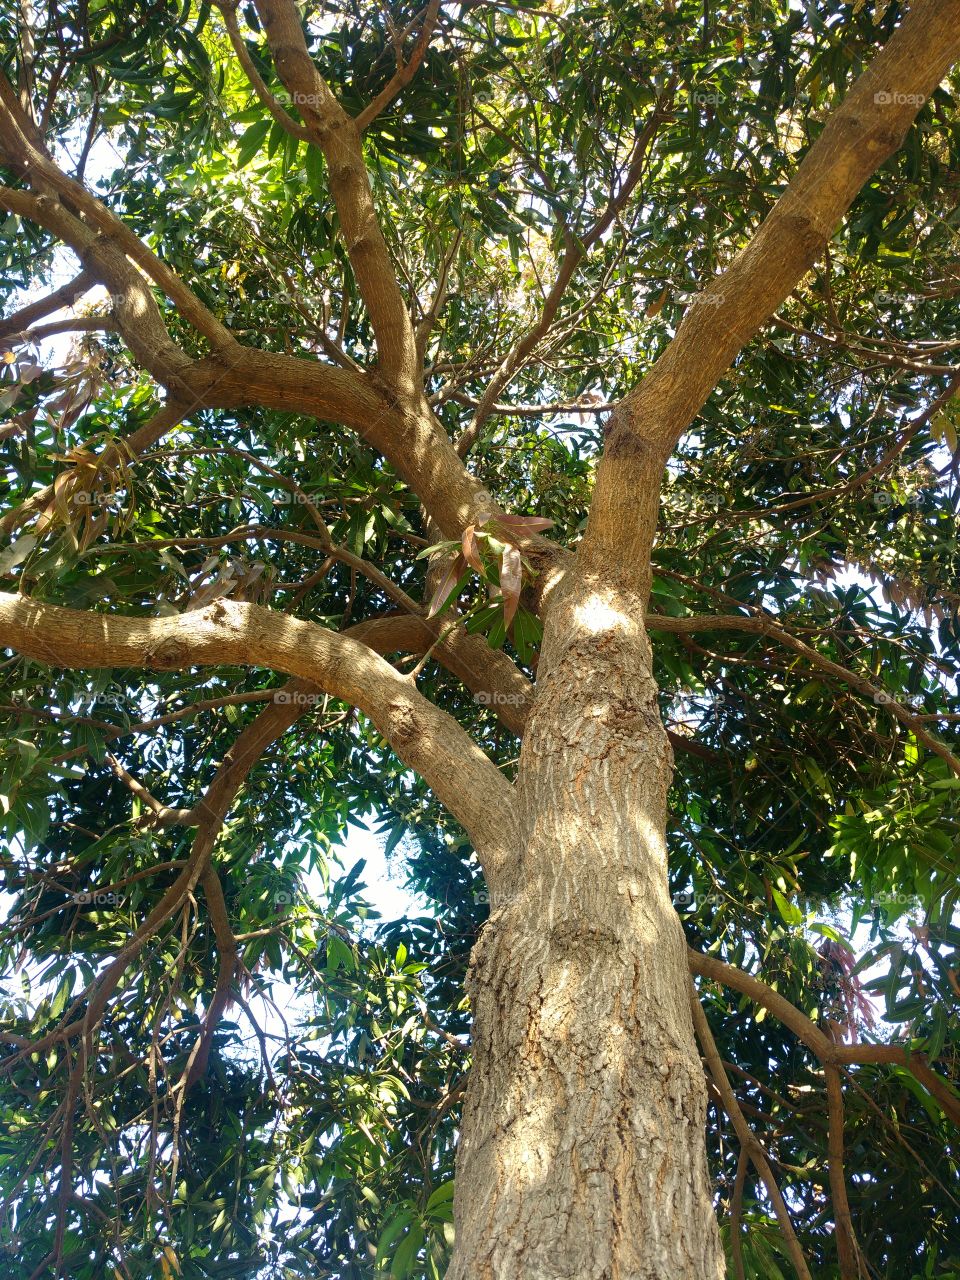 Tree's inside view